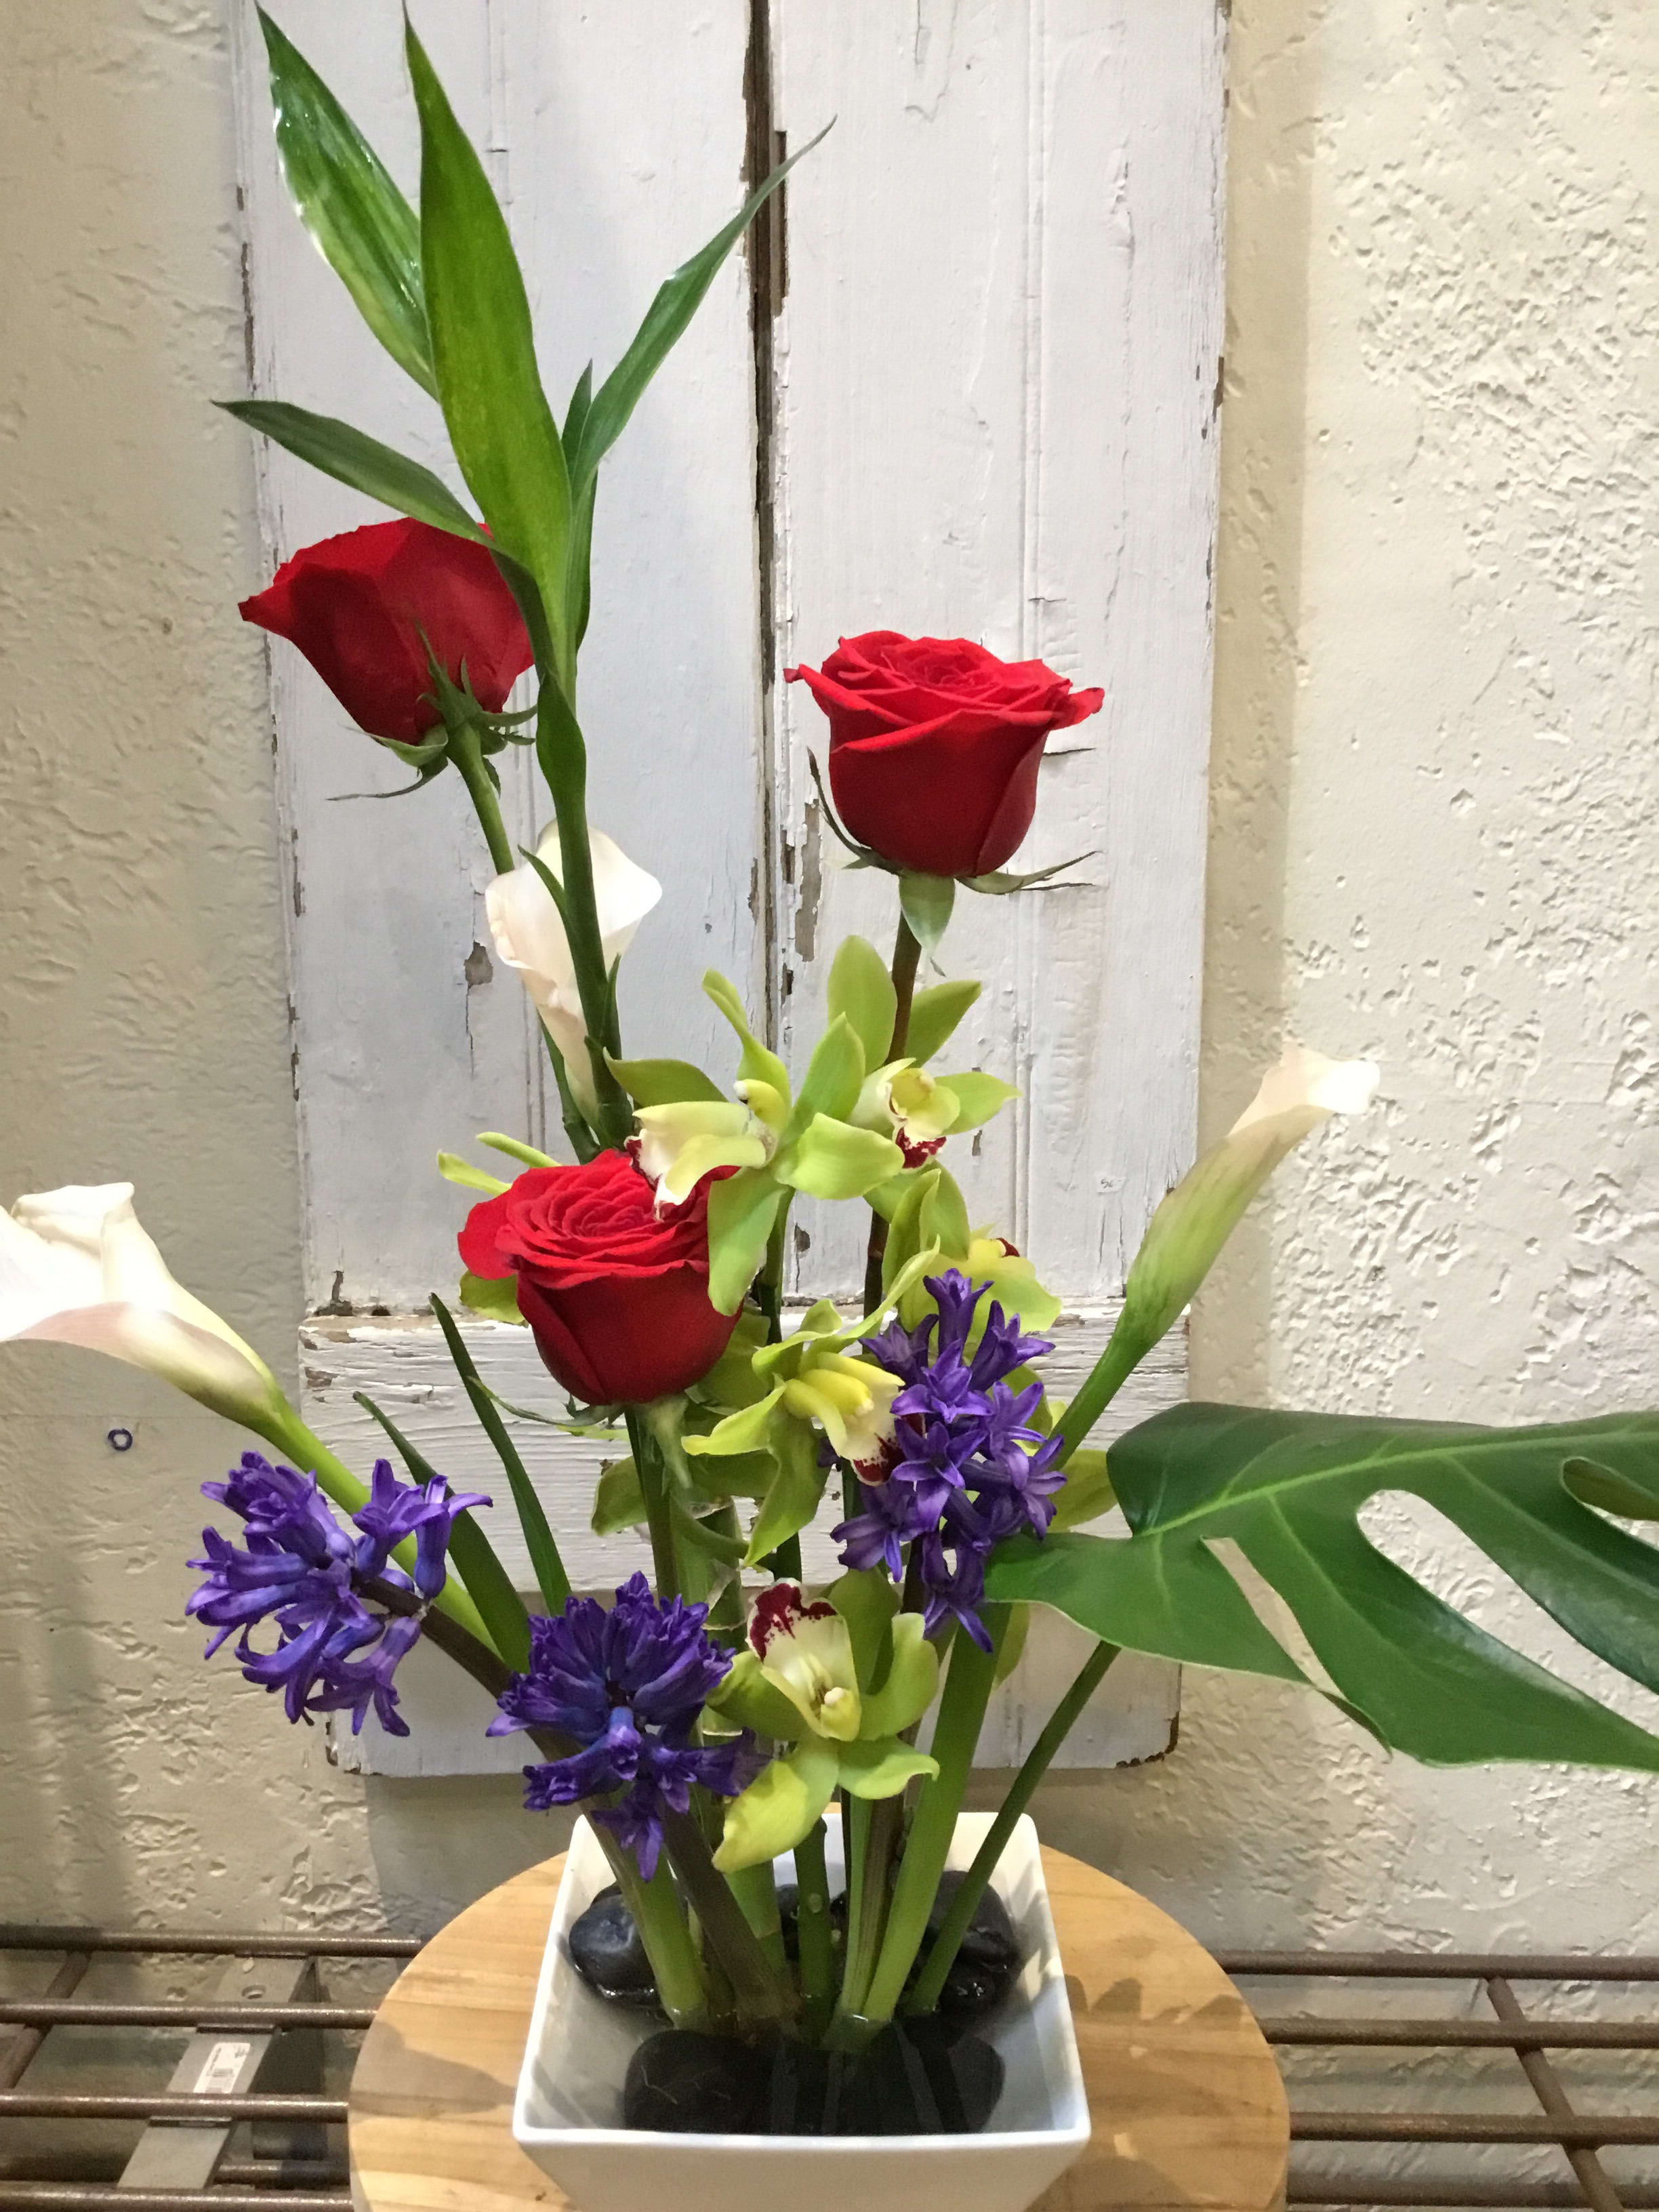 Iris, Roses, and Bells of Ireland Contemporary Piece - Centerville Florists